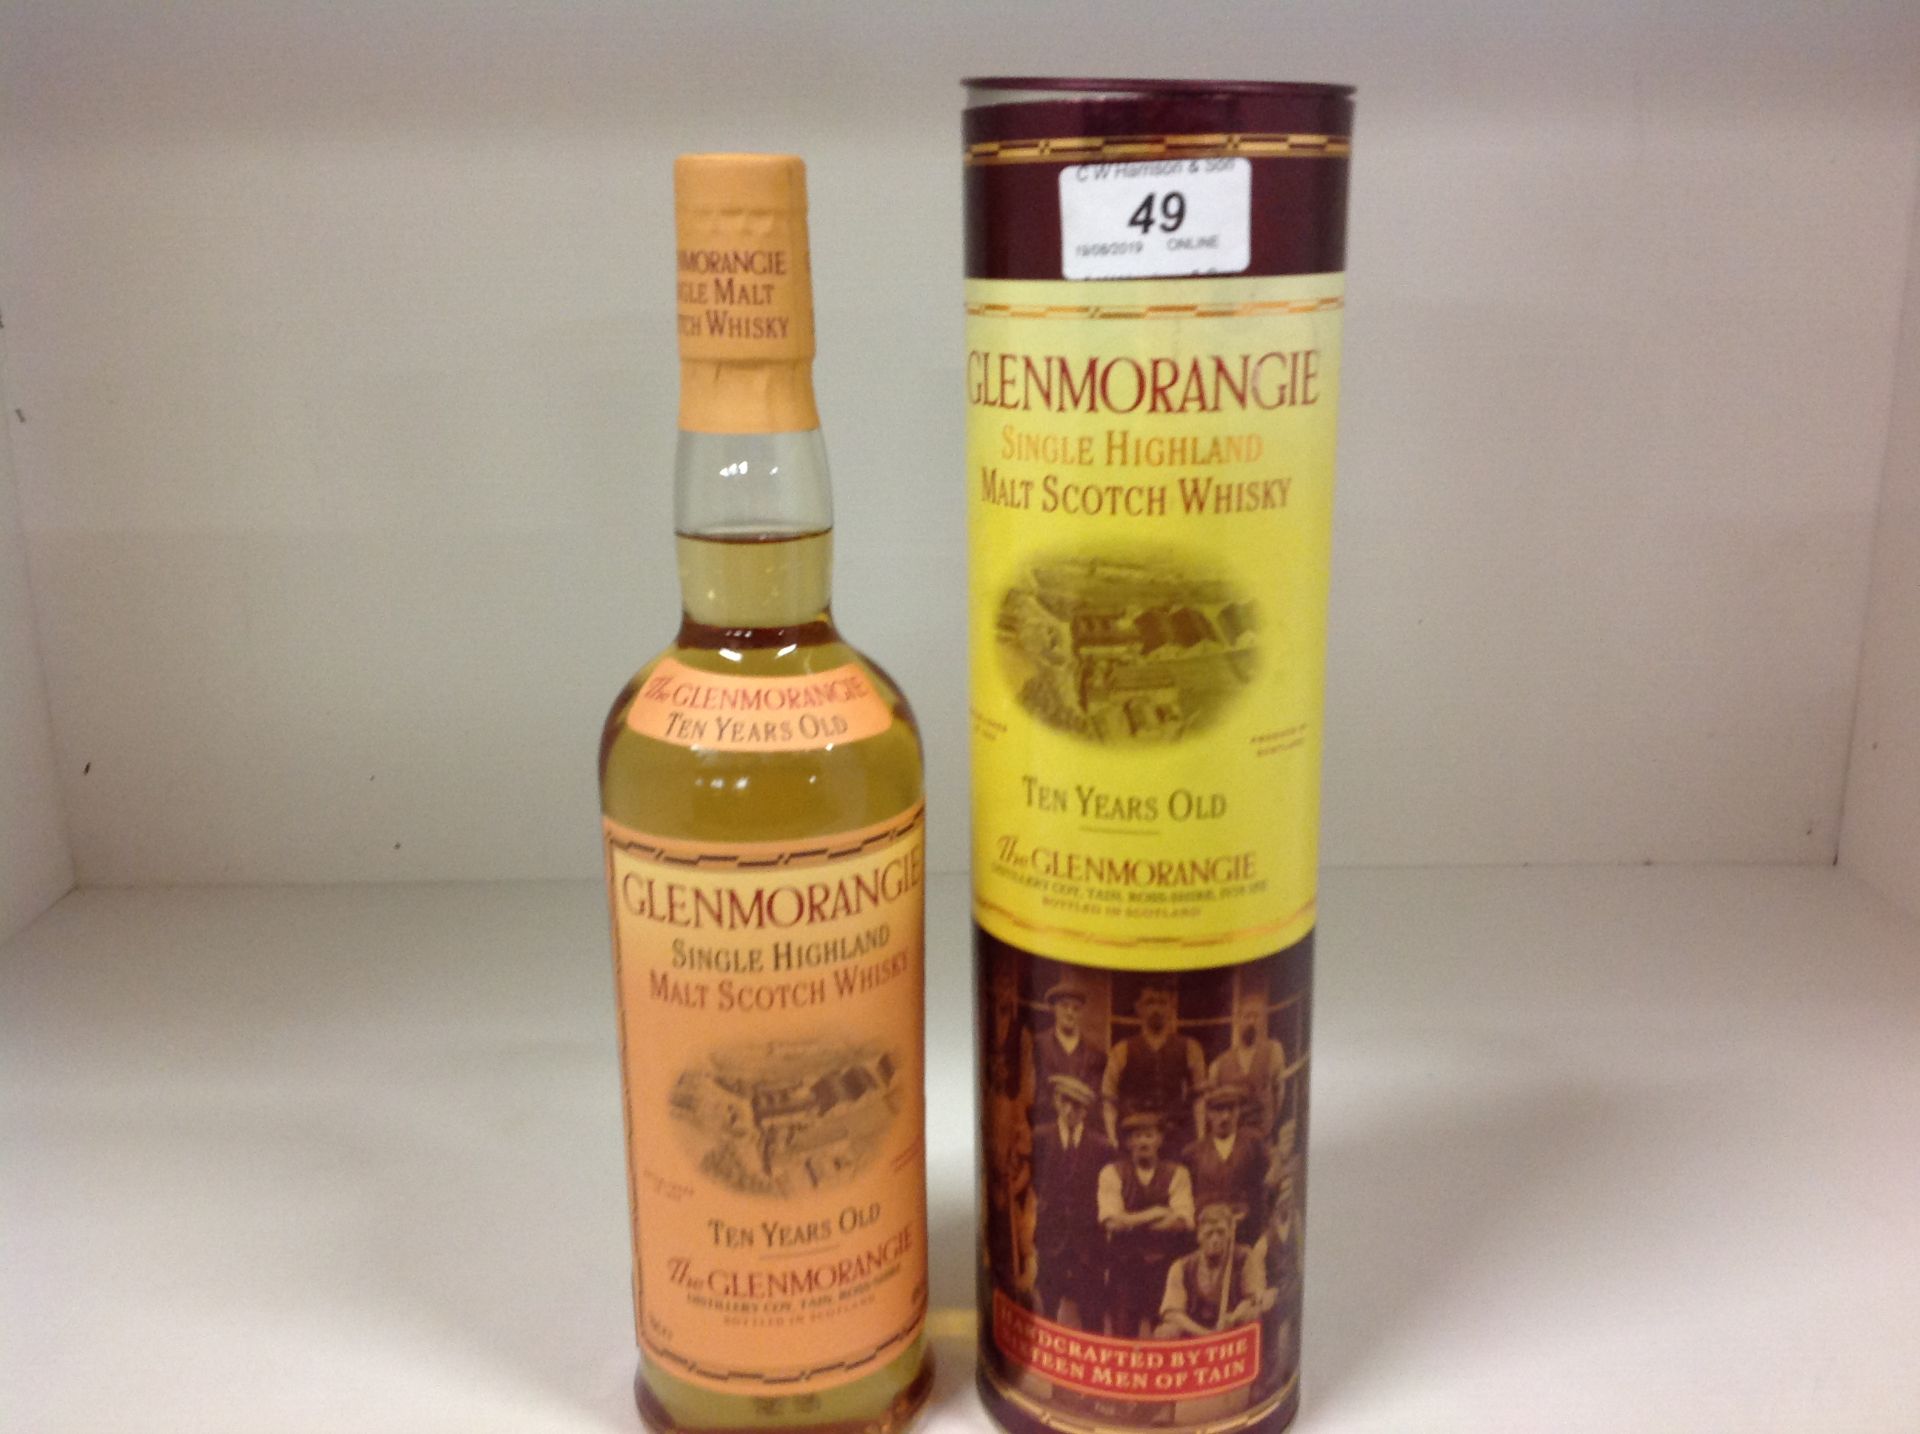 A 70cl bottle of Glenmorangie 10 years old single Highland Malt Scotch whisky in presentation tube